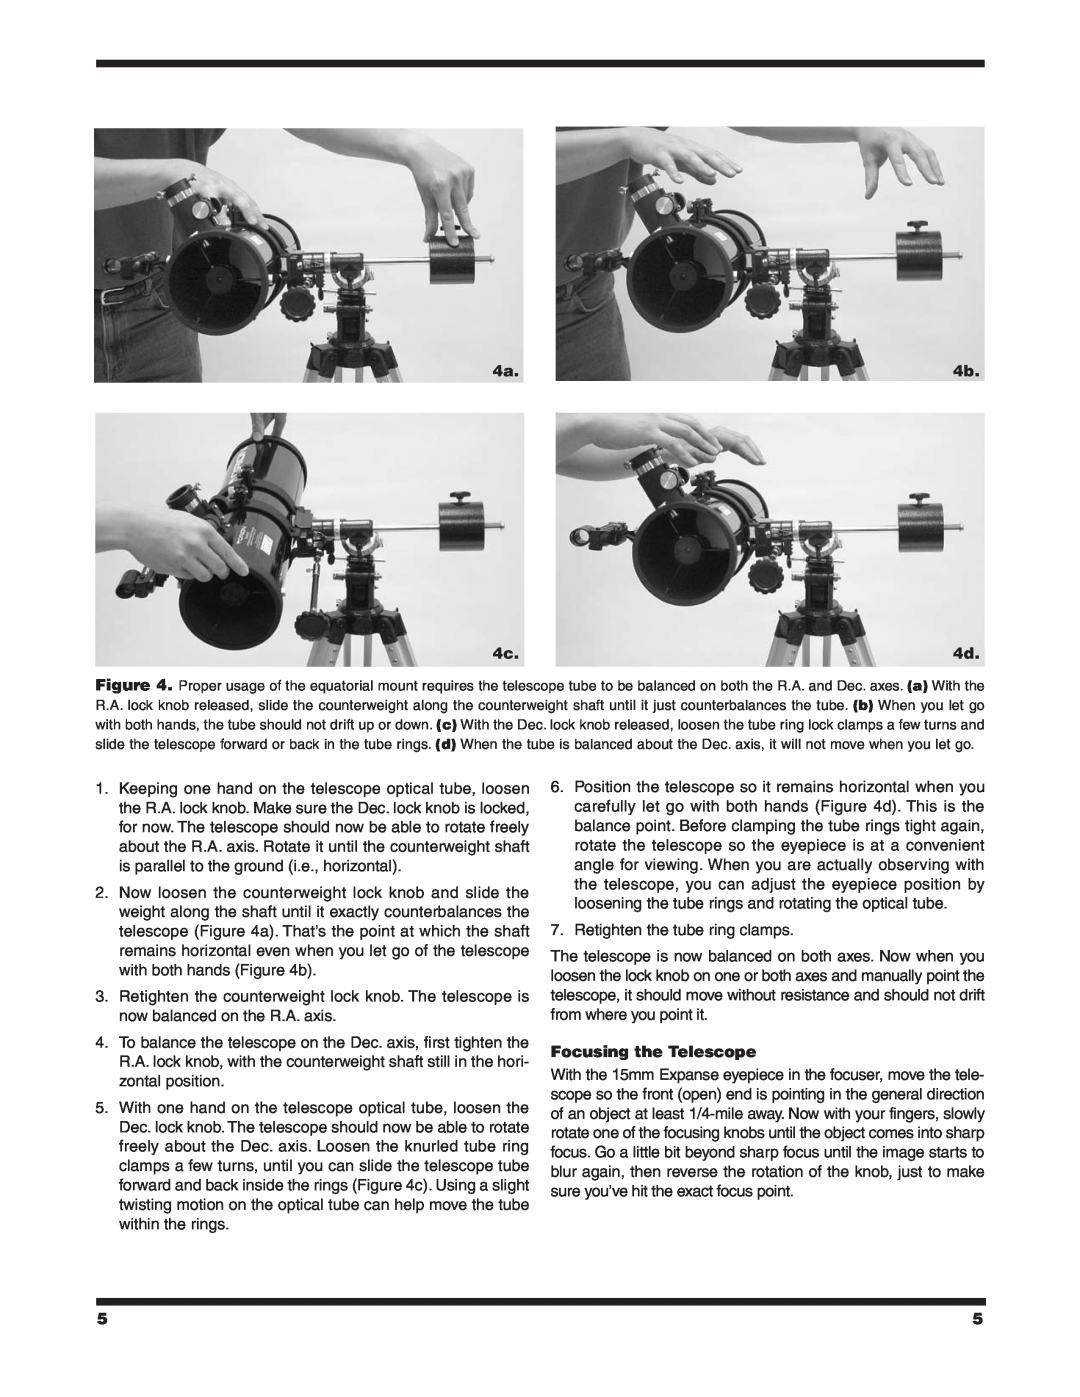 Orion 4.5 EQ instruction manual 4a.4b, 4c.4d, Focusing the Telescope 